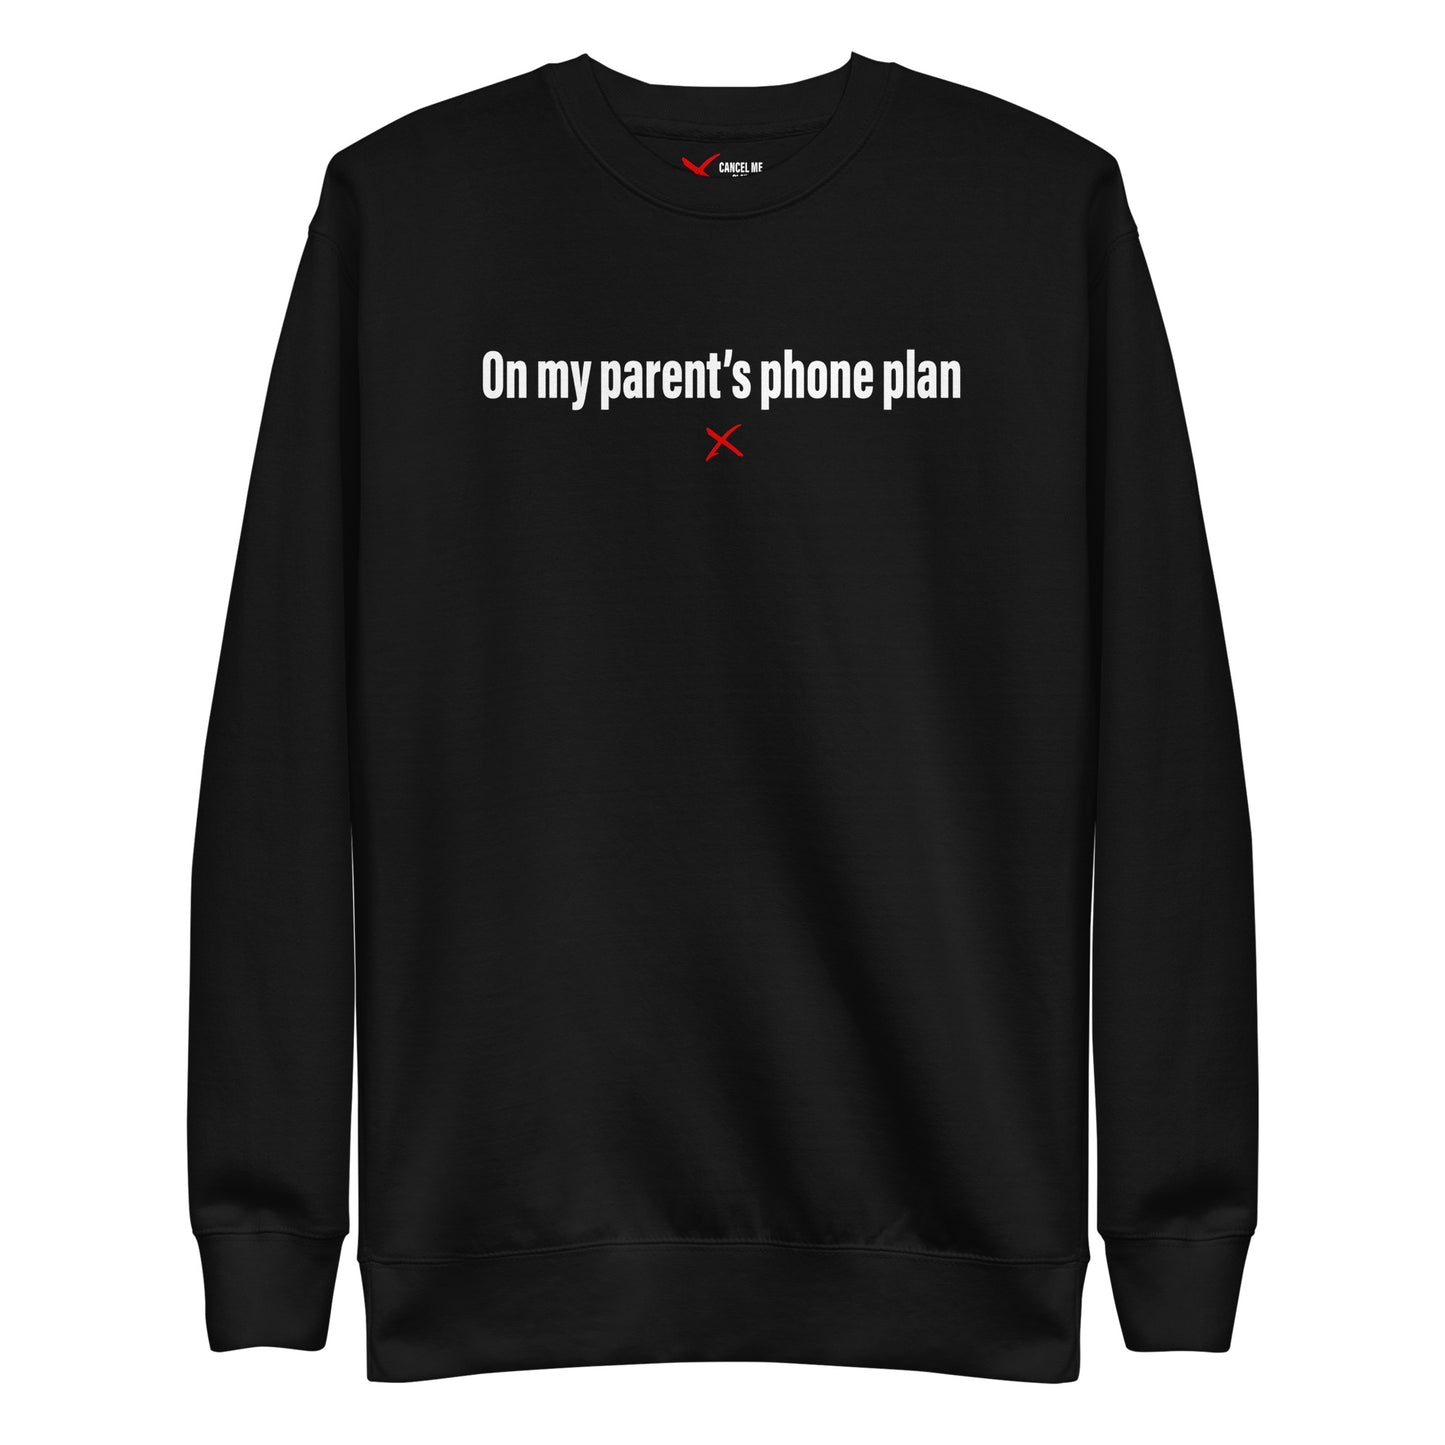 On my parent's phone plan - Sweatshirt